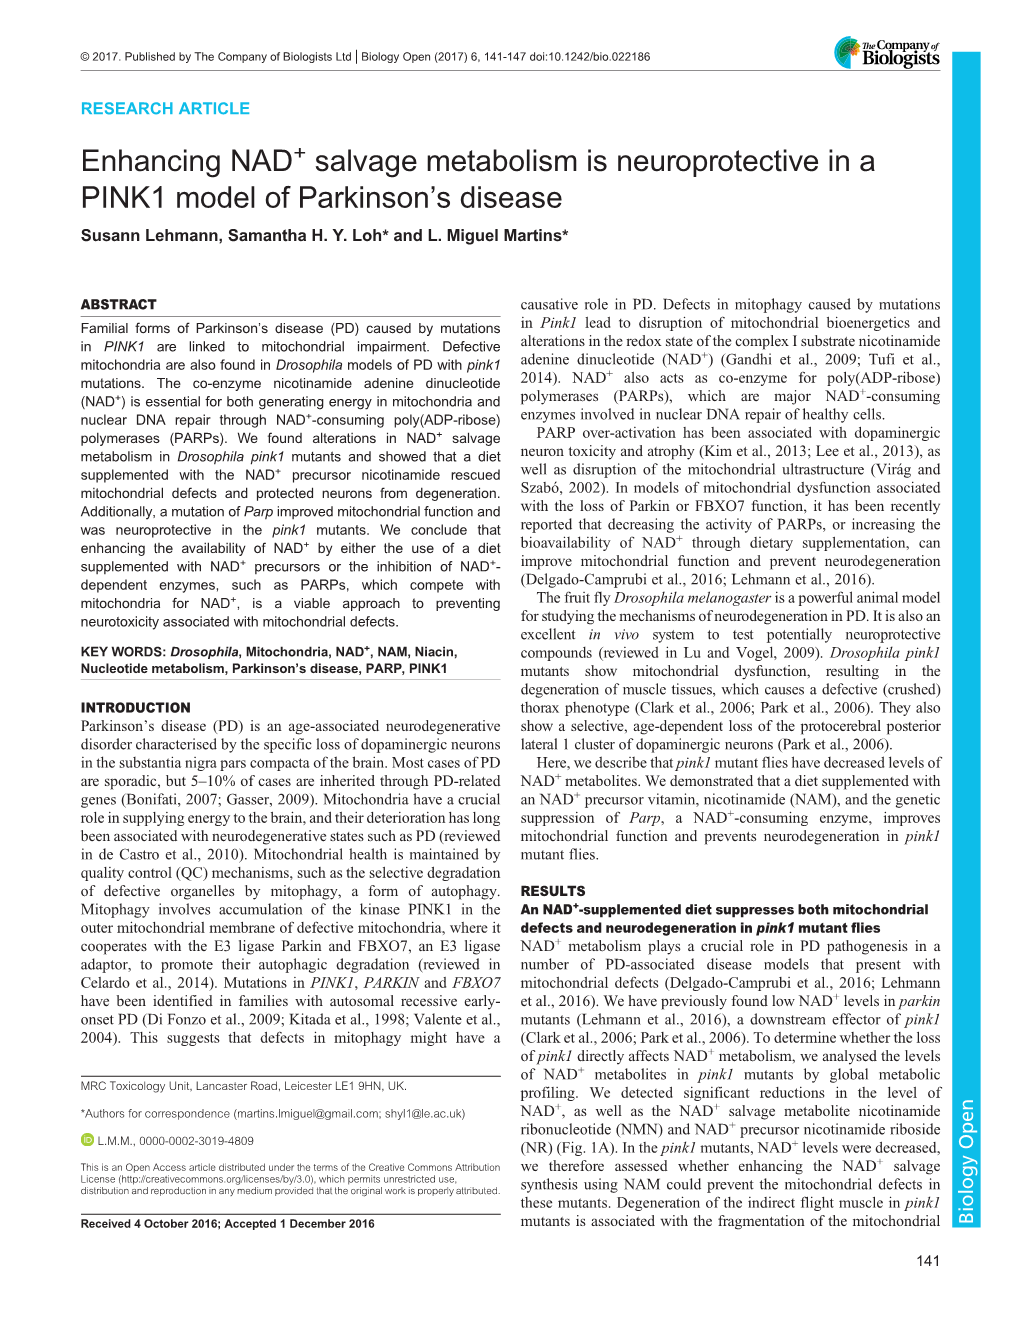 Enhancing NAD+ Salvage Metabolism Is Neuroprotective in a PINK1 Model of Parkinson’S Disease Susann Lehmann, Samantha H